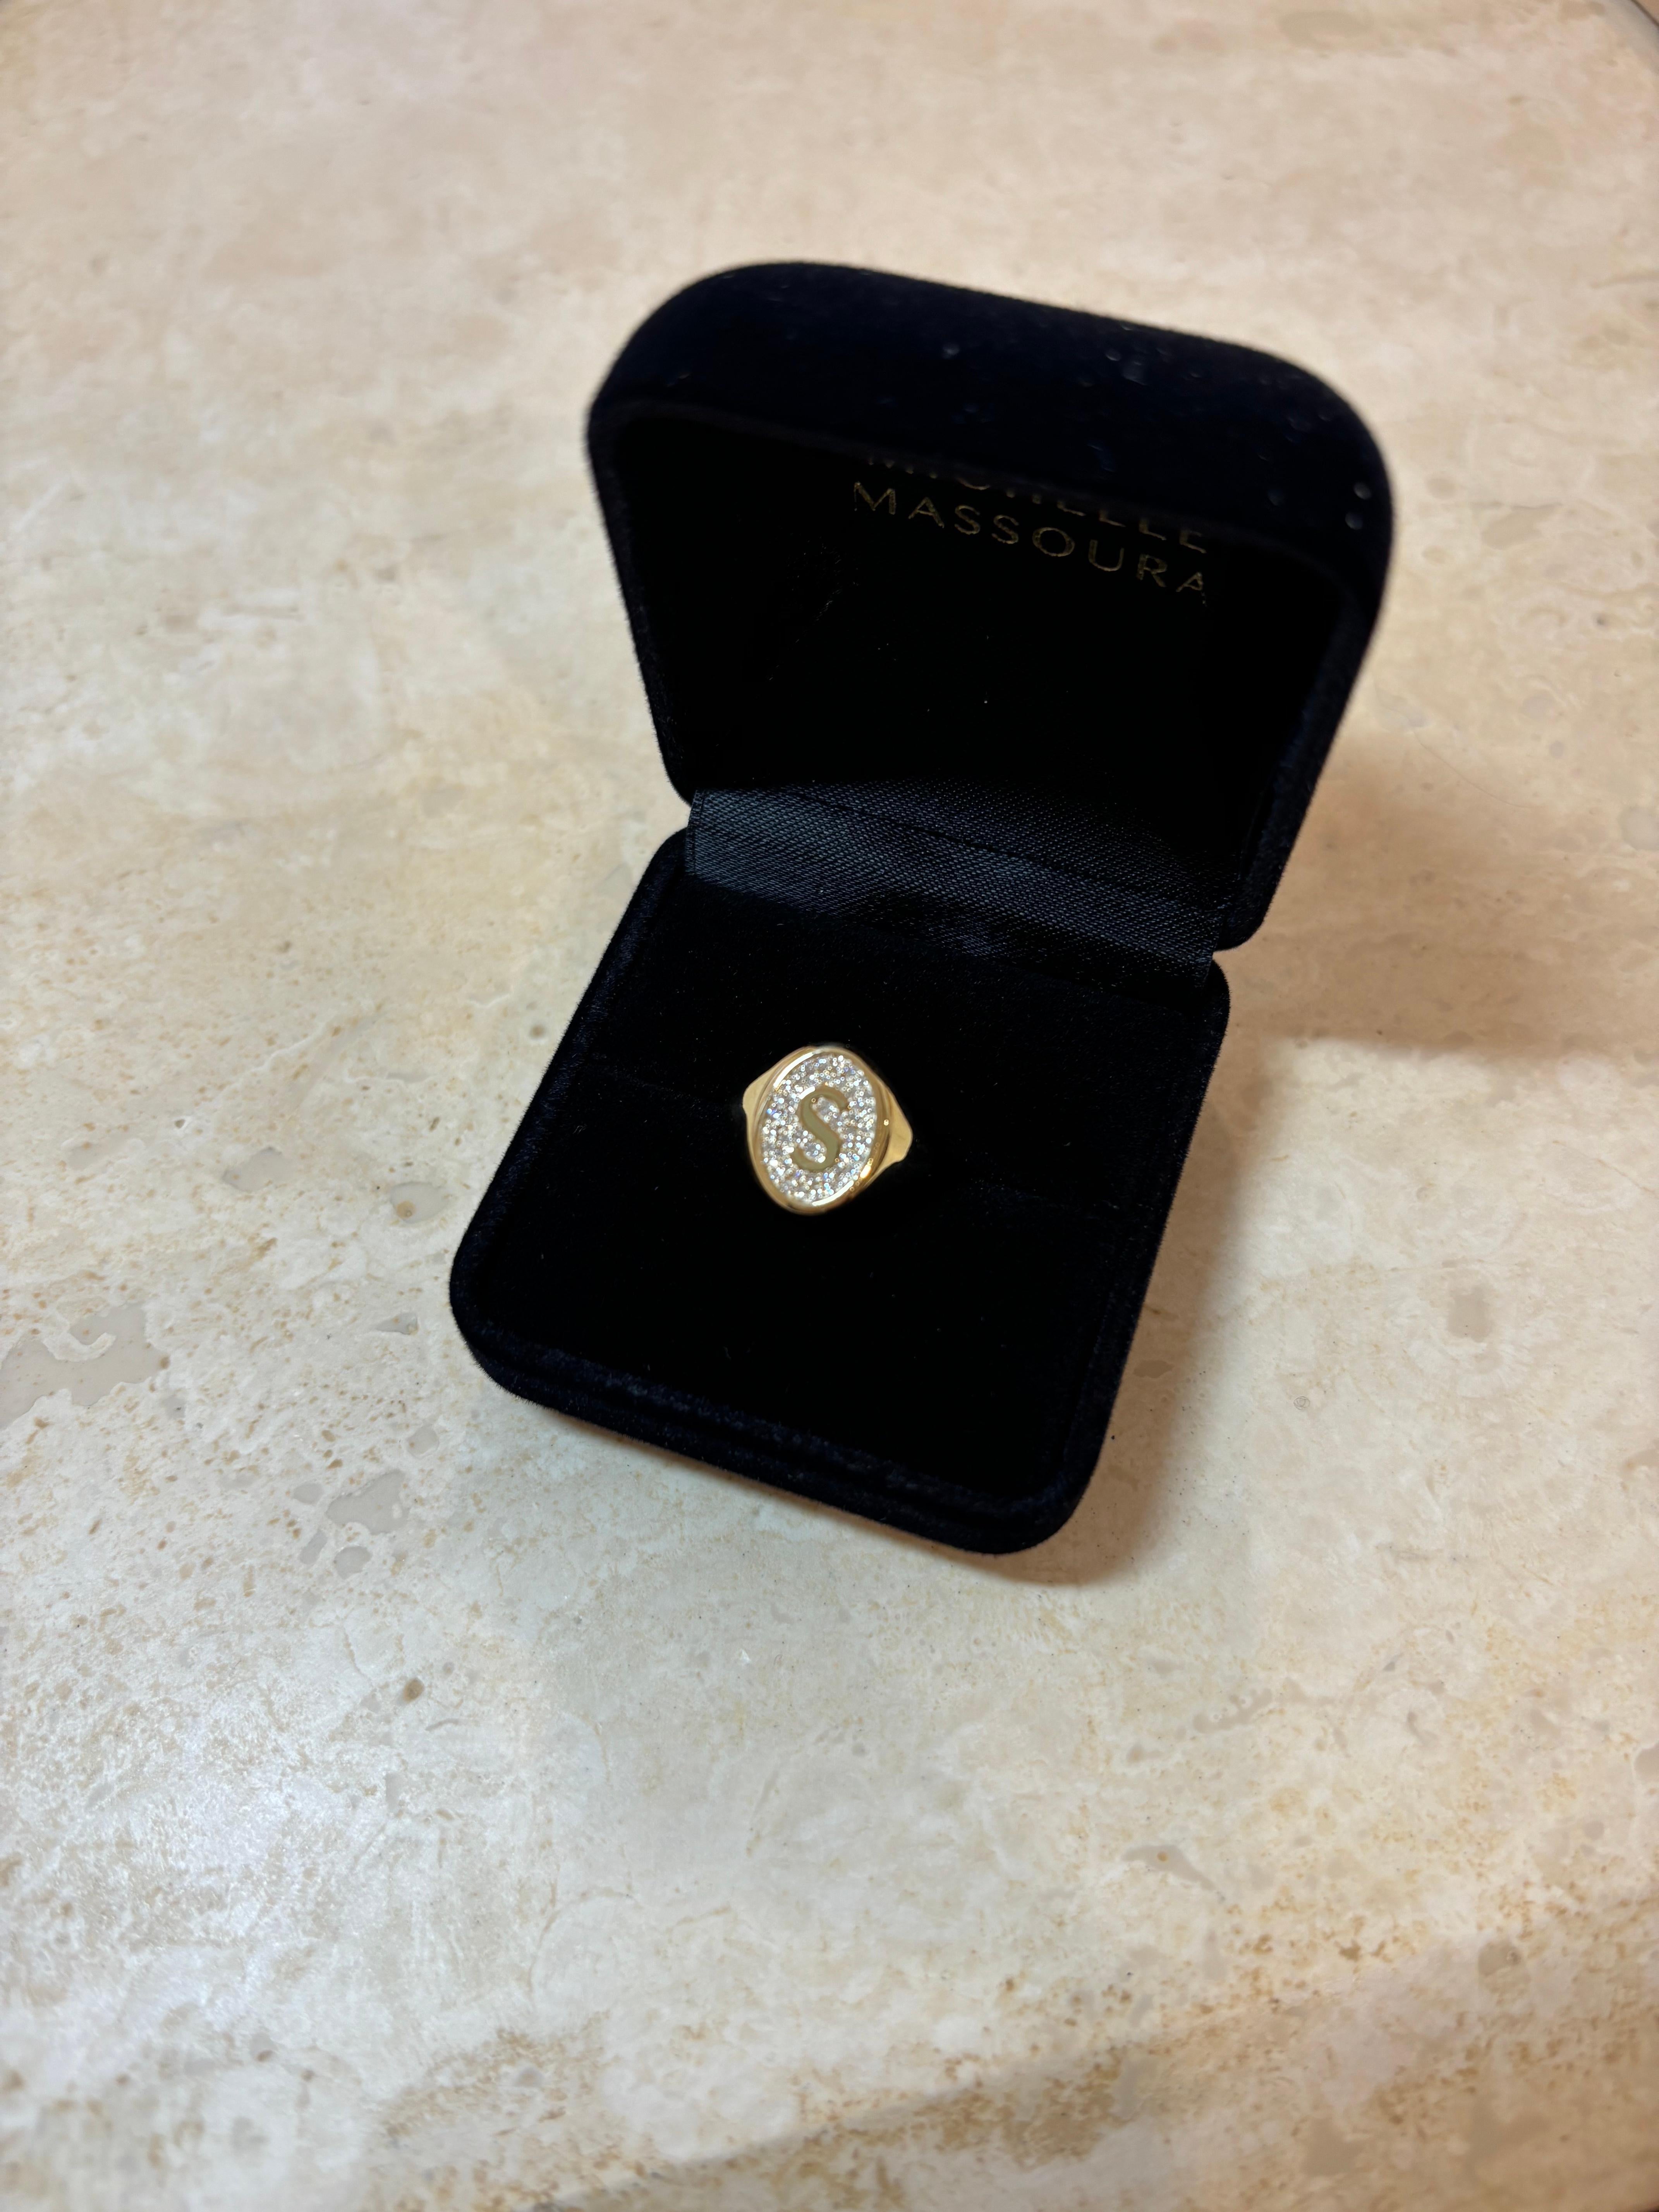 For Sale:  Diamond Signet Ring, Letter S, 18k Gold, by Michelle Massoura 6